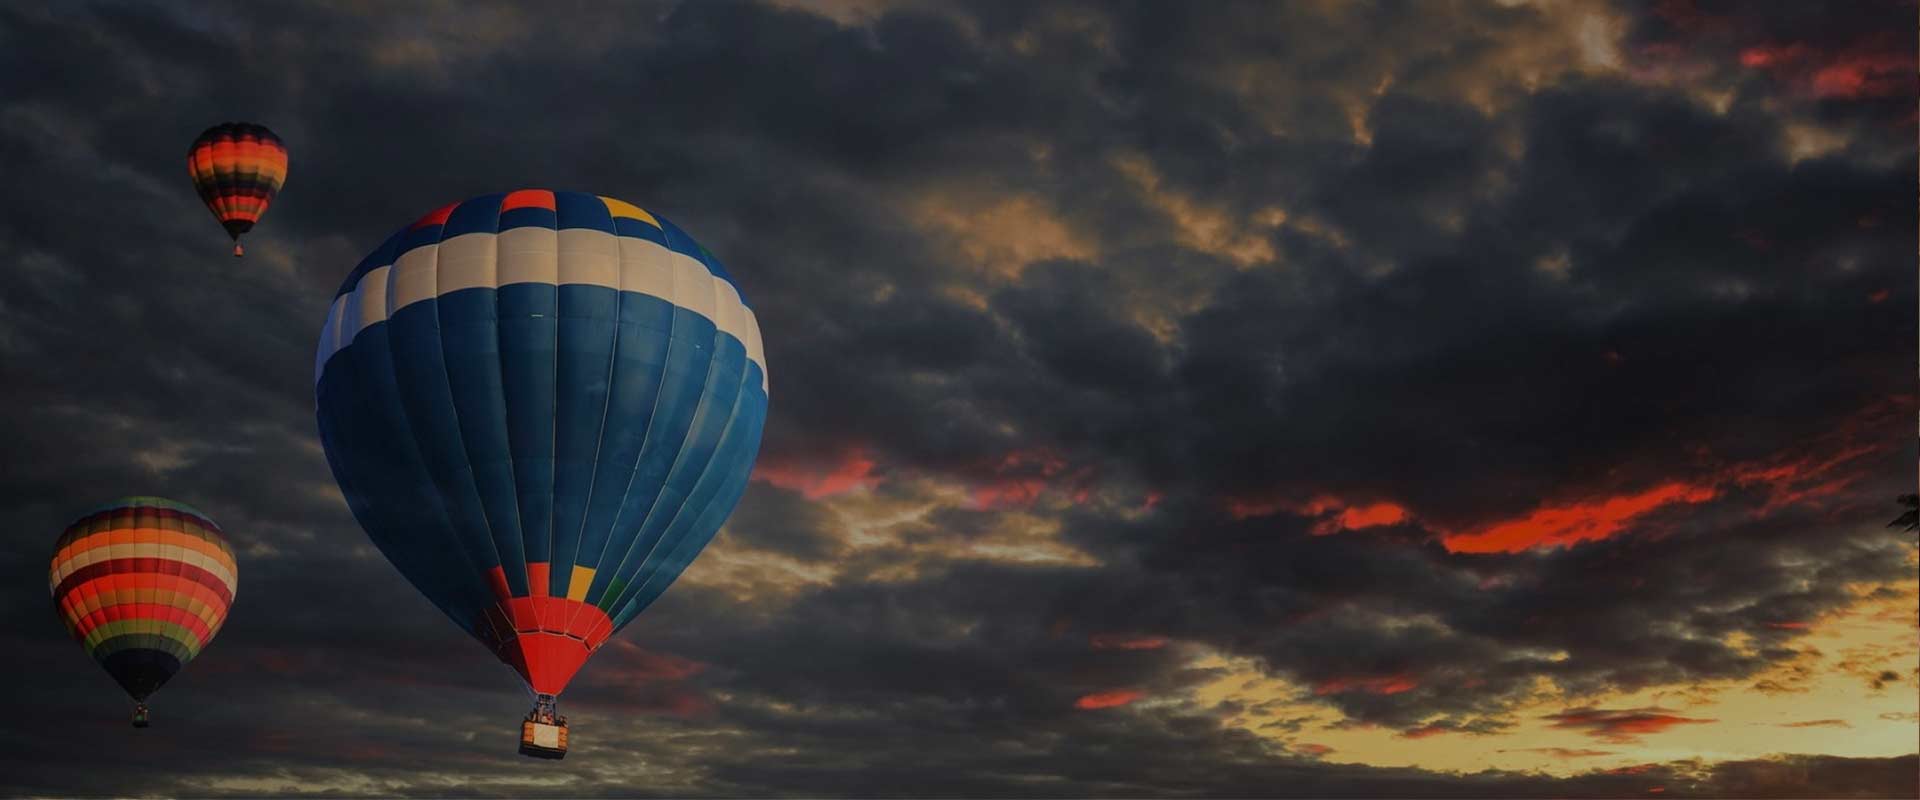 Tanzania Hot Air Balloon Safari